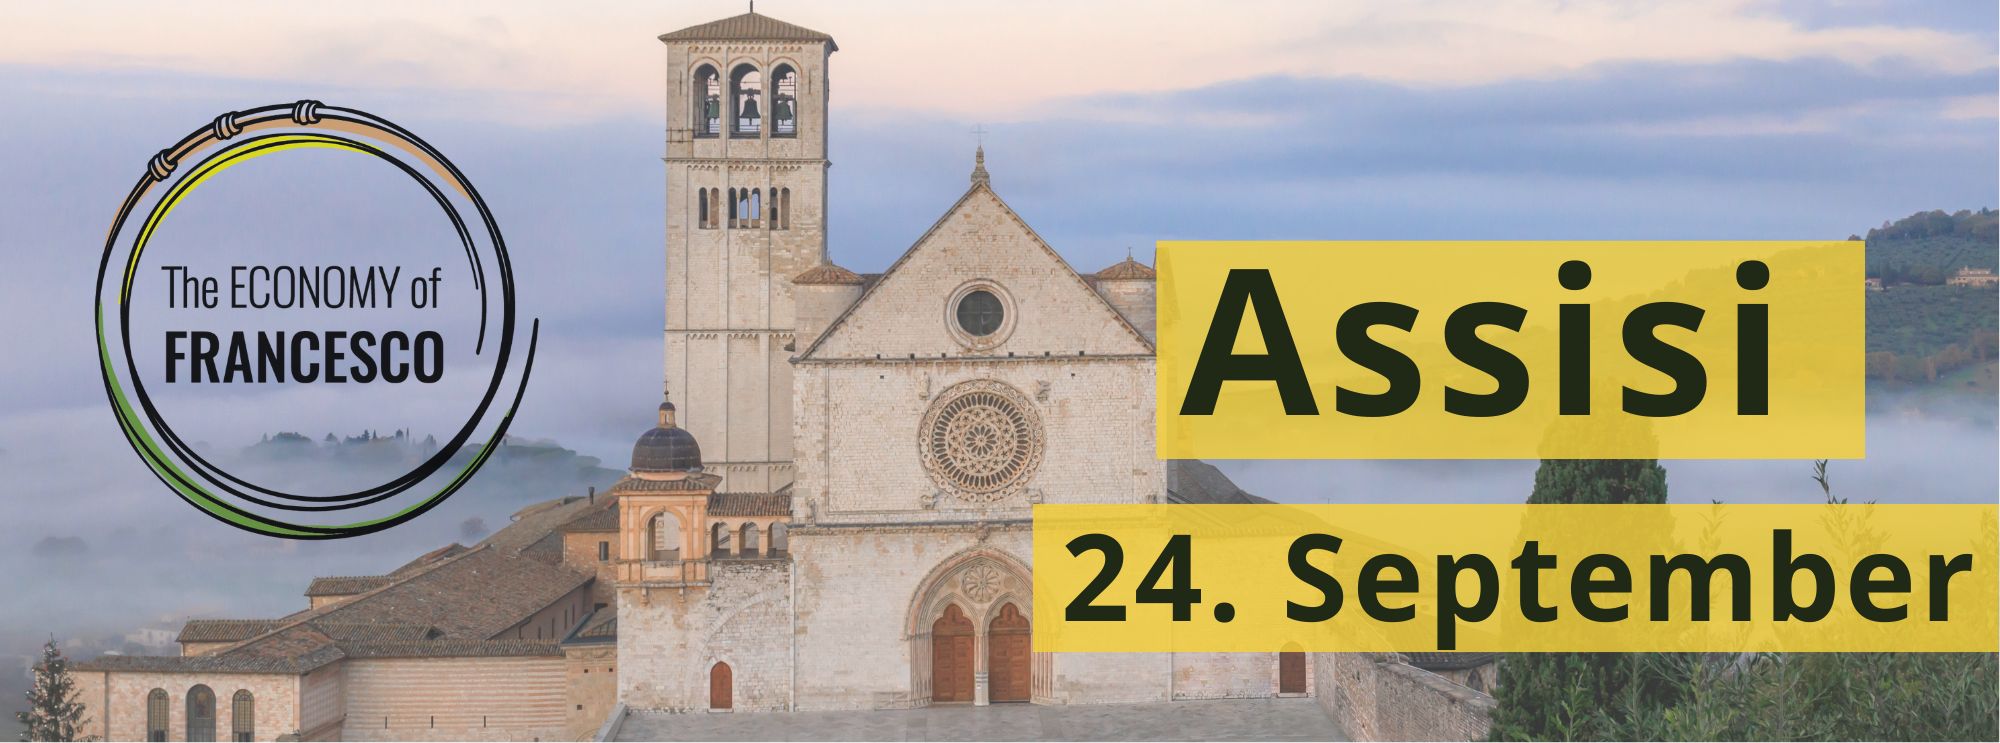 Besuch des Heiligen Vaters in Assisi aus Anlass des Wirtschaftsforums “Economy of Francesco” [24. September 2022]